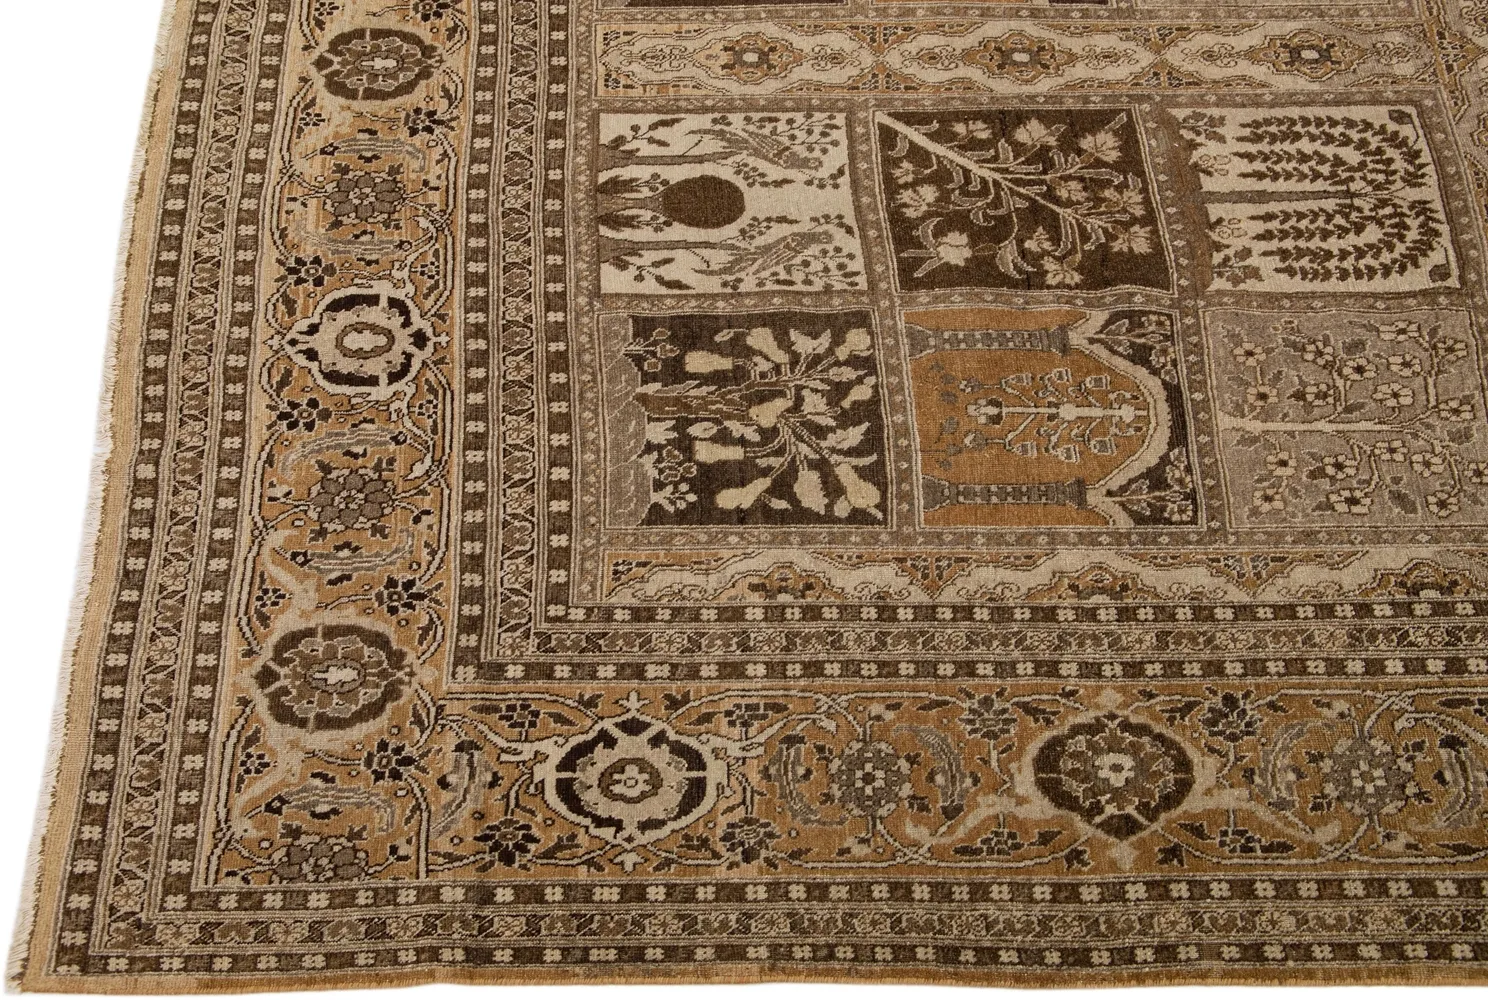 Antique Persian Tabriz Rug - Apadana - Brown - Brown